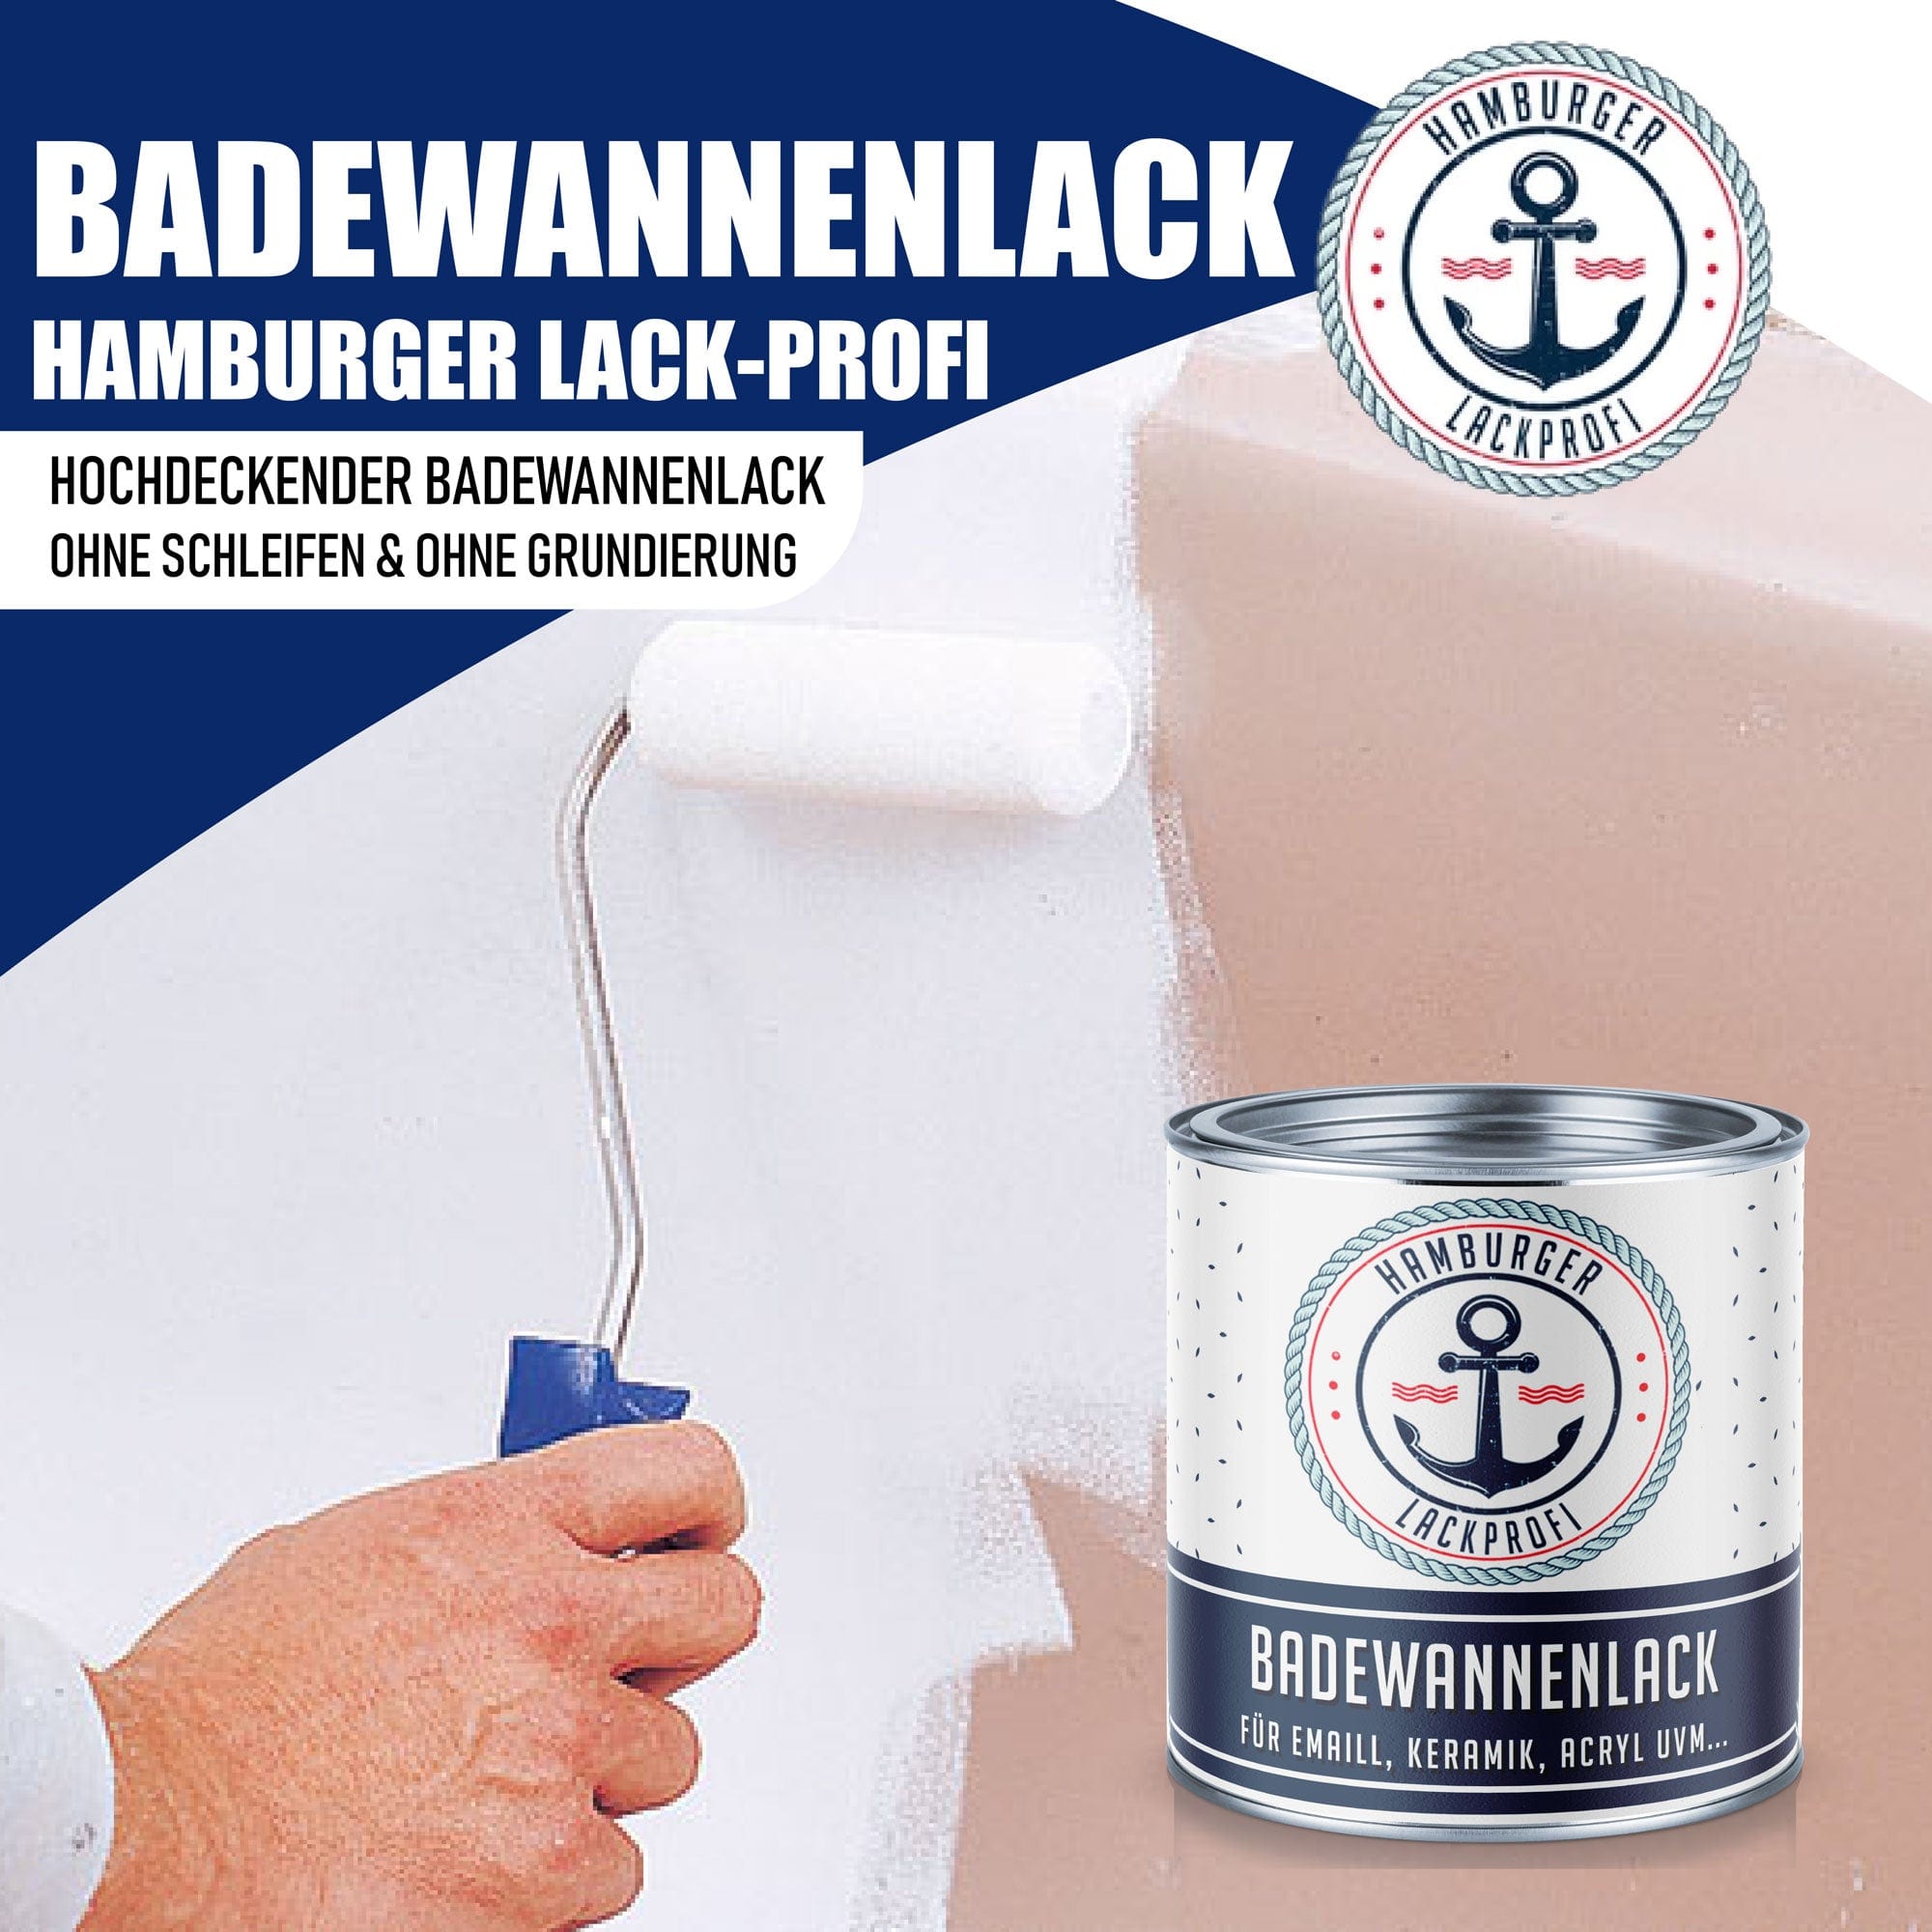 Hamburger Lack-Profi Badewannenlack Hamburger Lack-Profi 2K Badewannenlack Kastanienbraun RAL 8015 - Glänzend / Seidenmatt / Matt